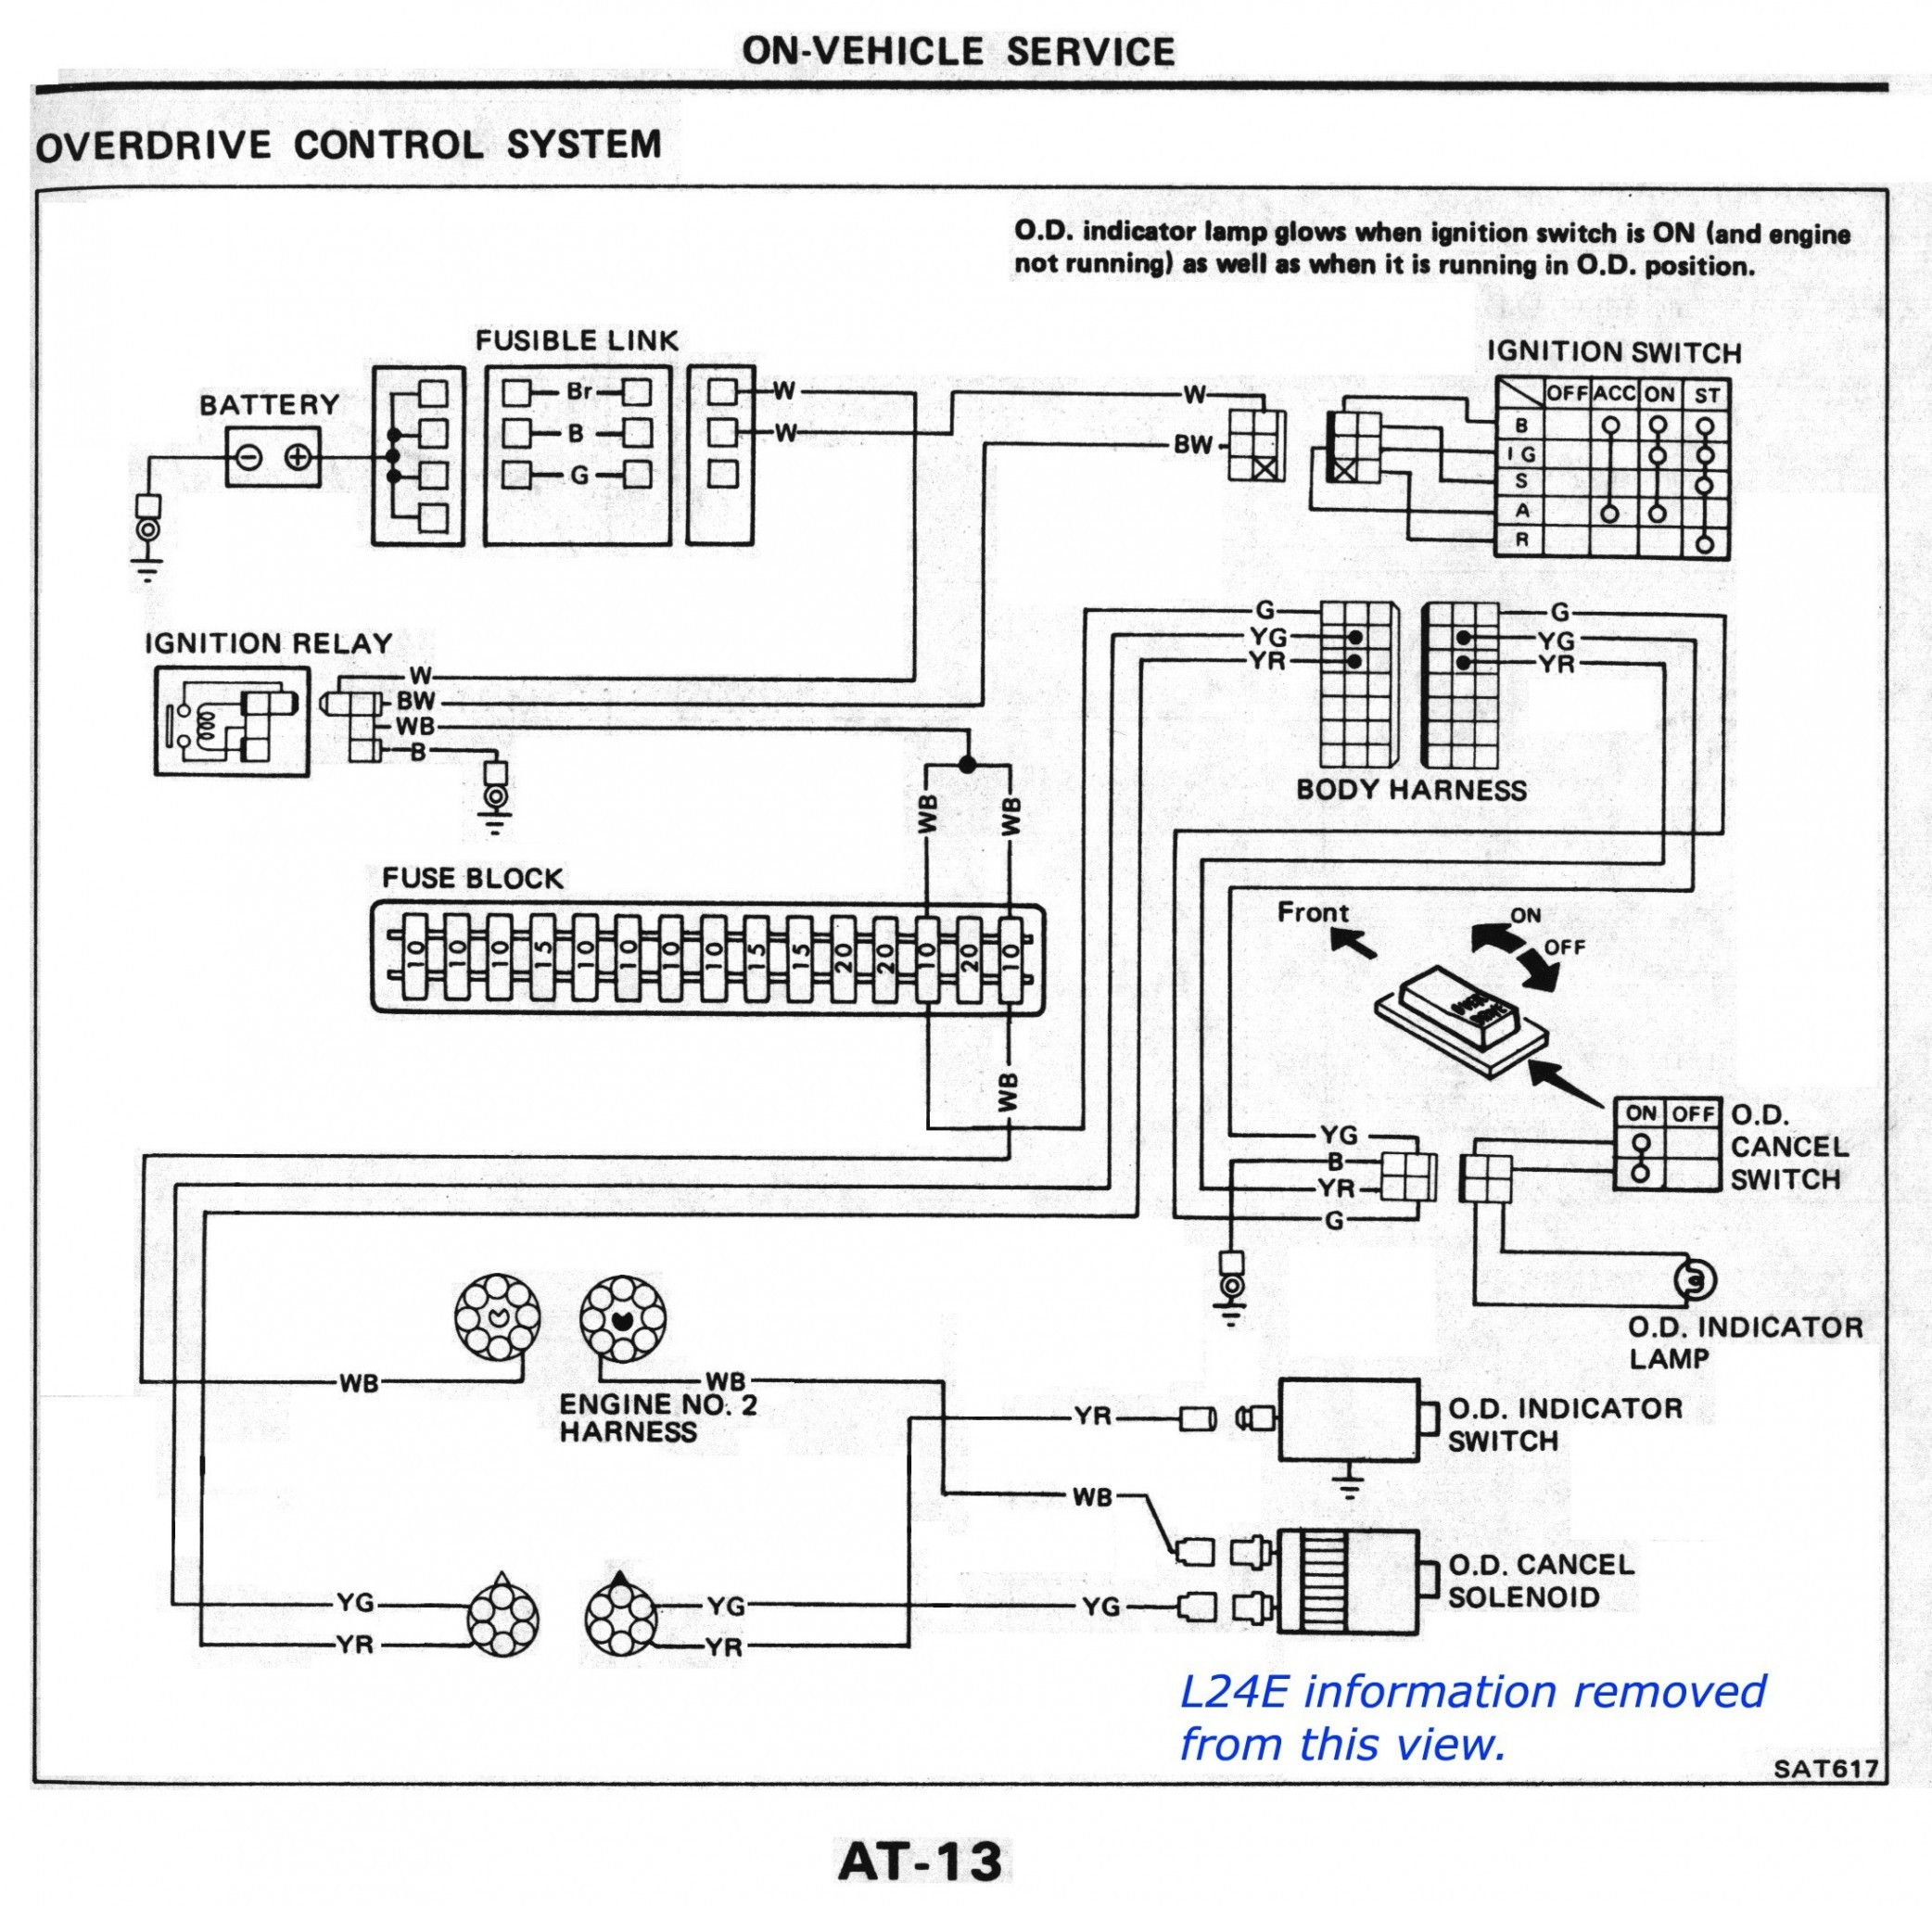 Car Battery Diagram – Car Reverse Light Wiring Diagram